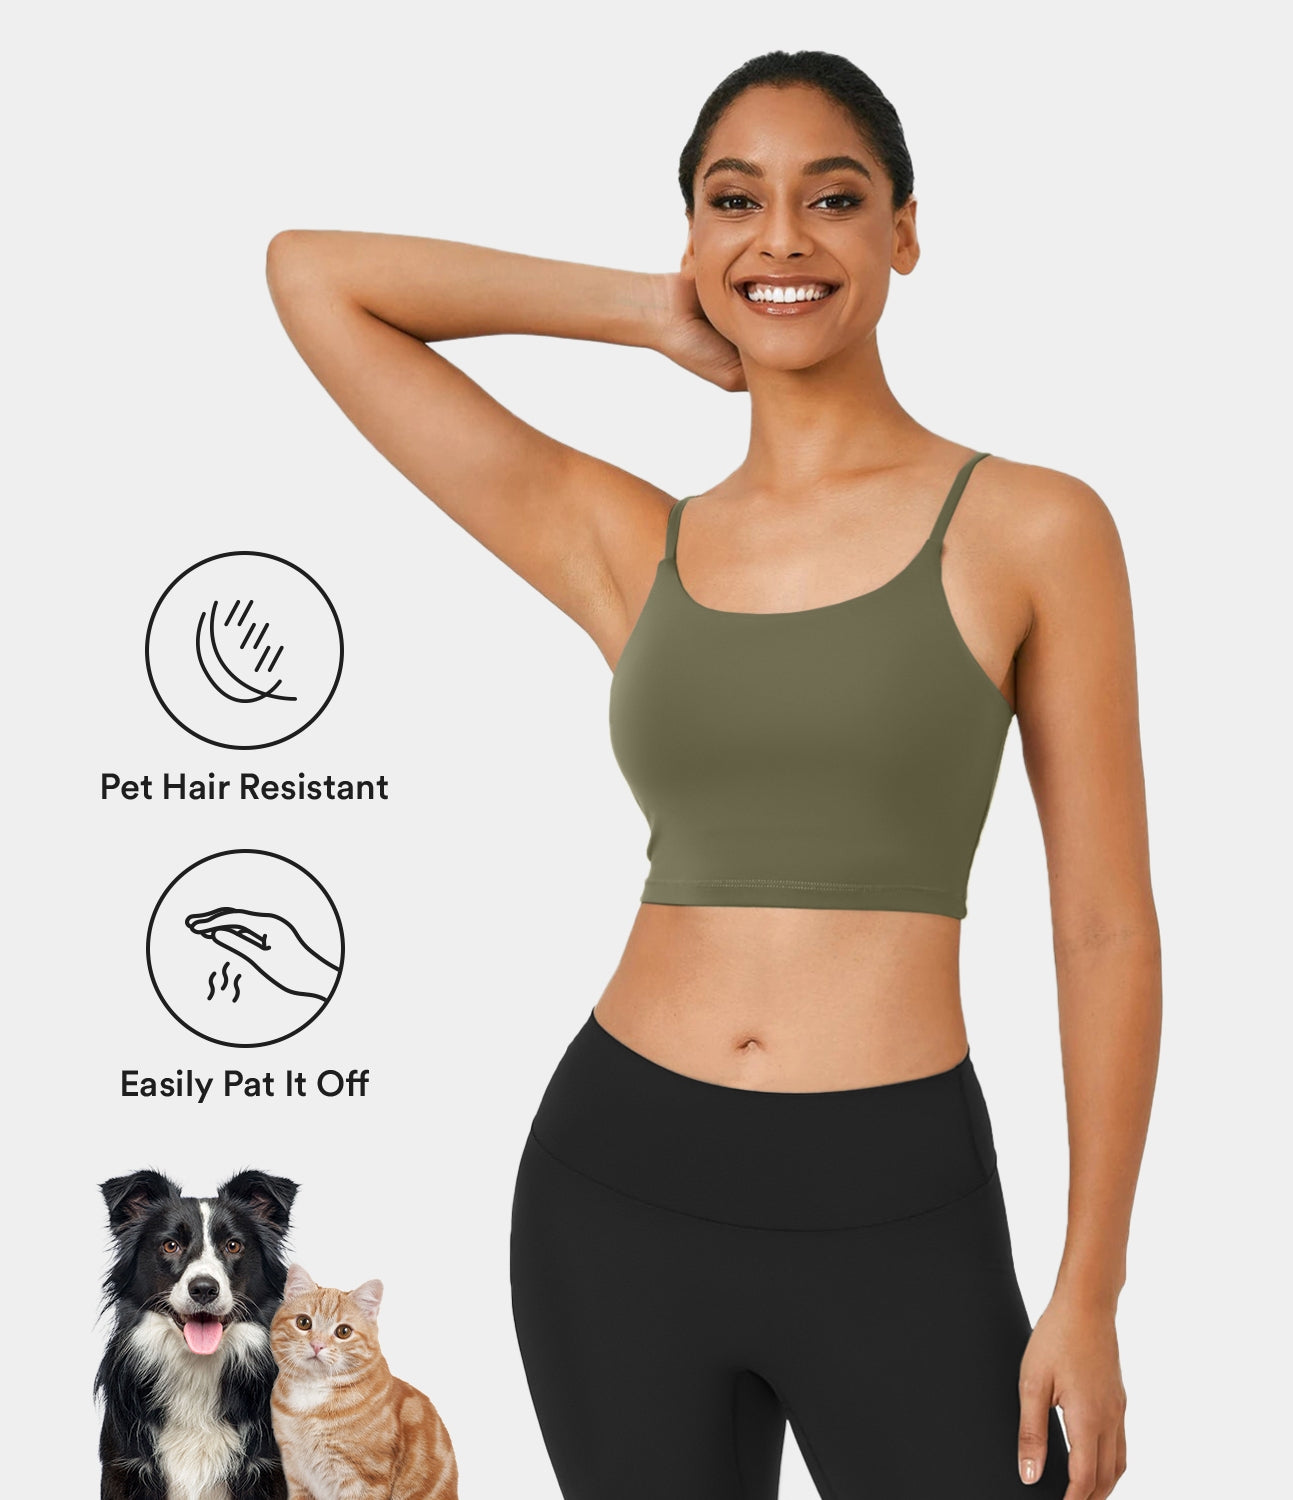 

Halara PatitoffВ® Pet Hair Resistant Workout Cropped Cami Tank Top - Light Azure -  golf tops halter top tunic tops sleeveless tops